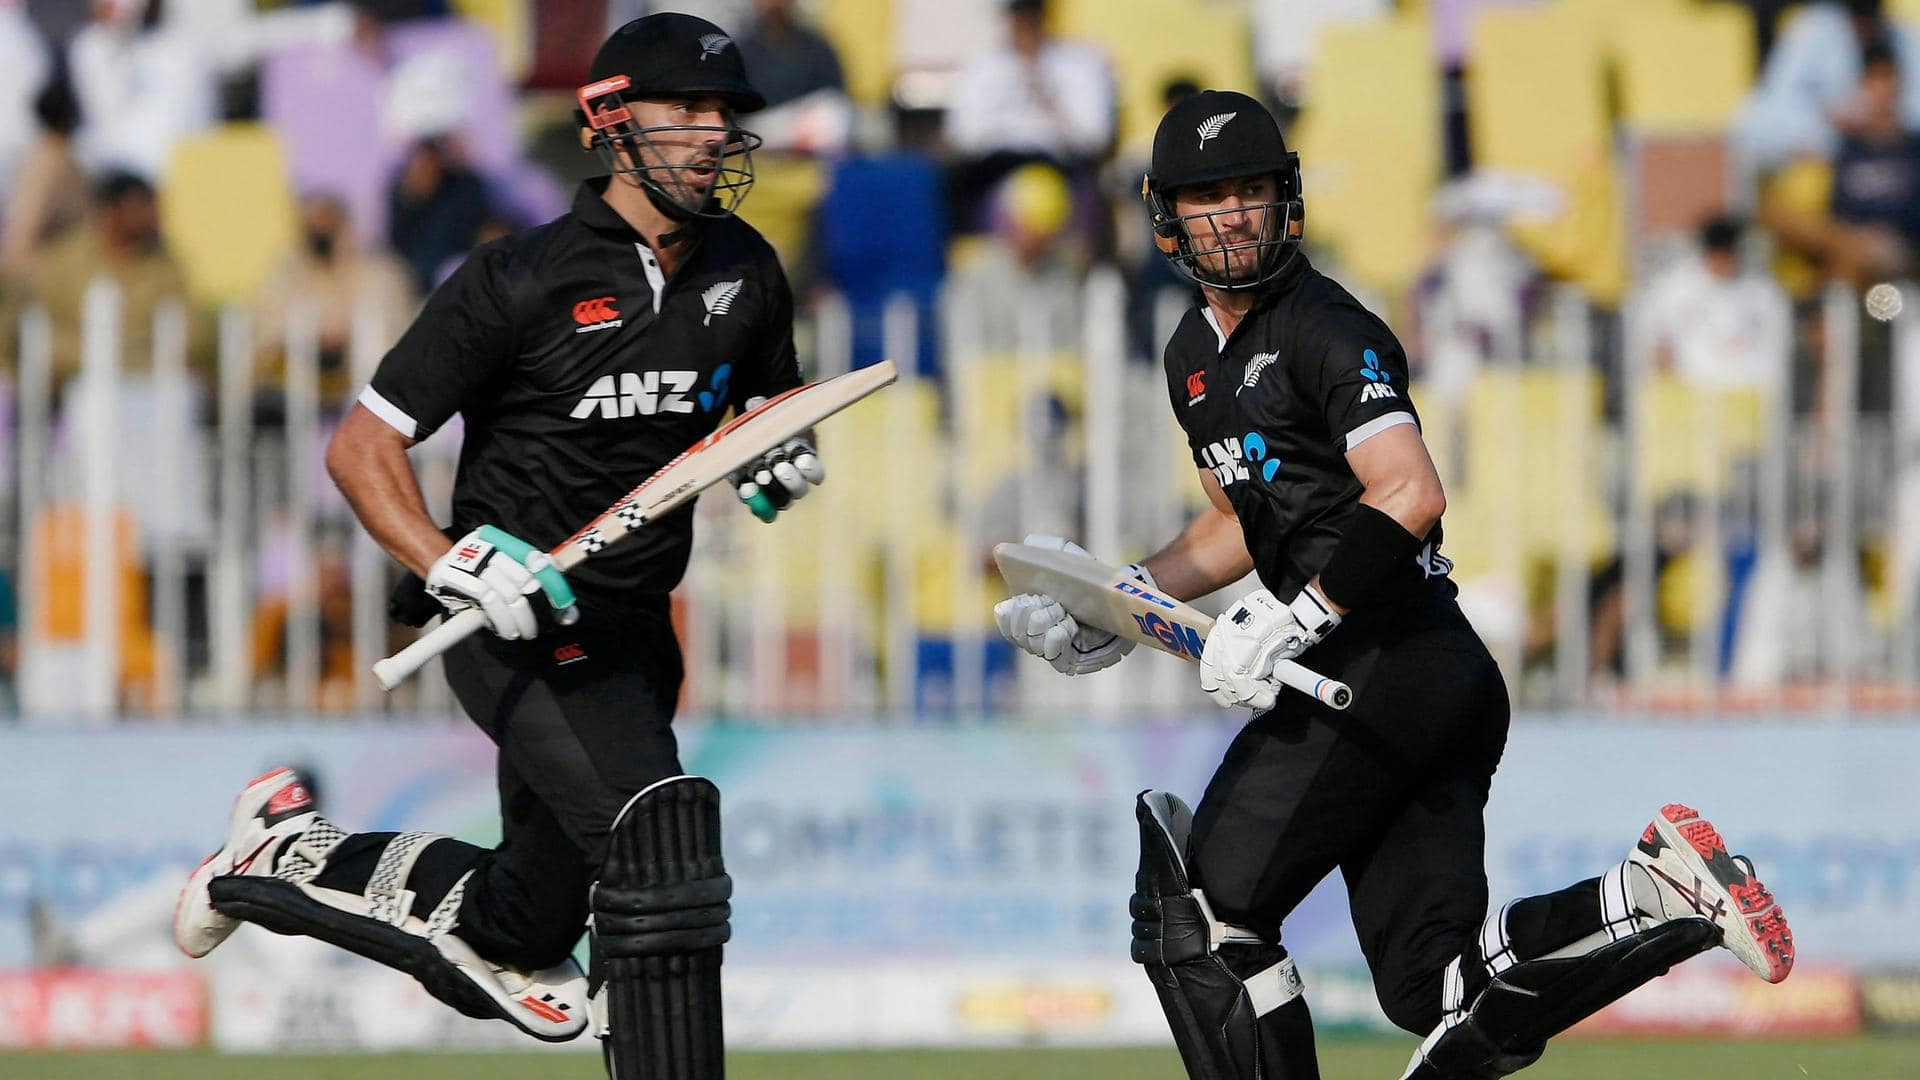 PAK vs NZ, 2nd ODI: Blackcaps aim for a comeback 